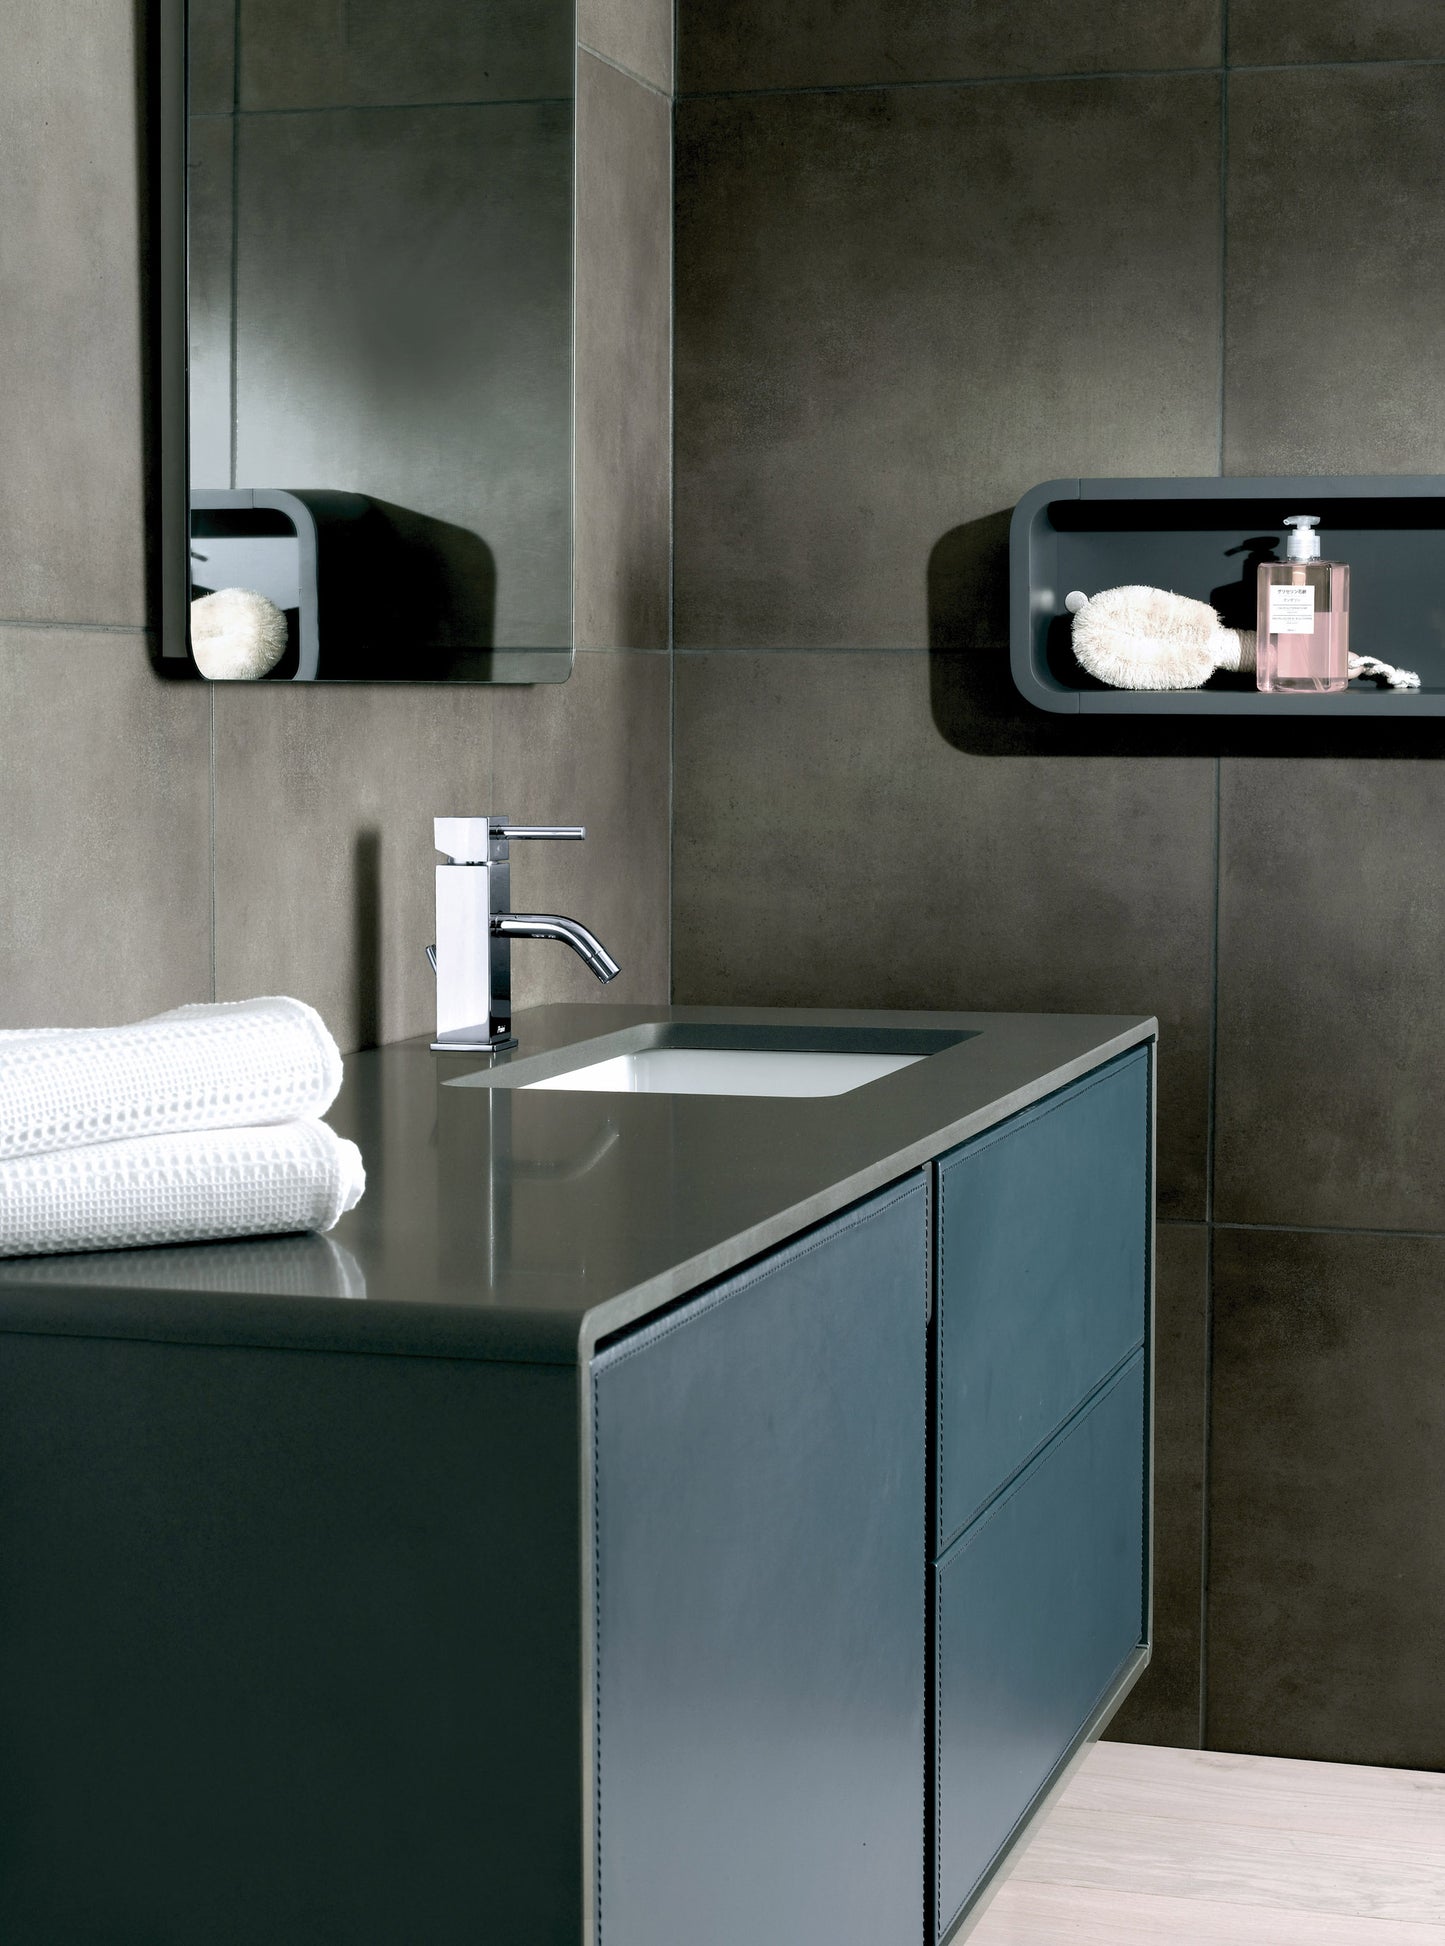 LaToscana AXIA Single Handle Lavatory Faucet in Chrome - Luxe Bathroom Vanities